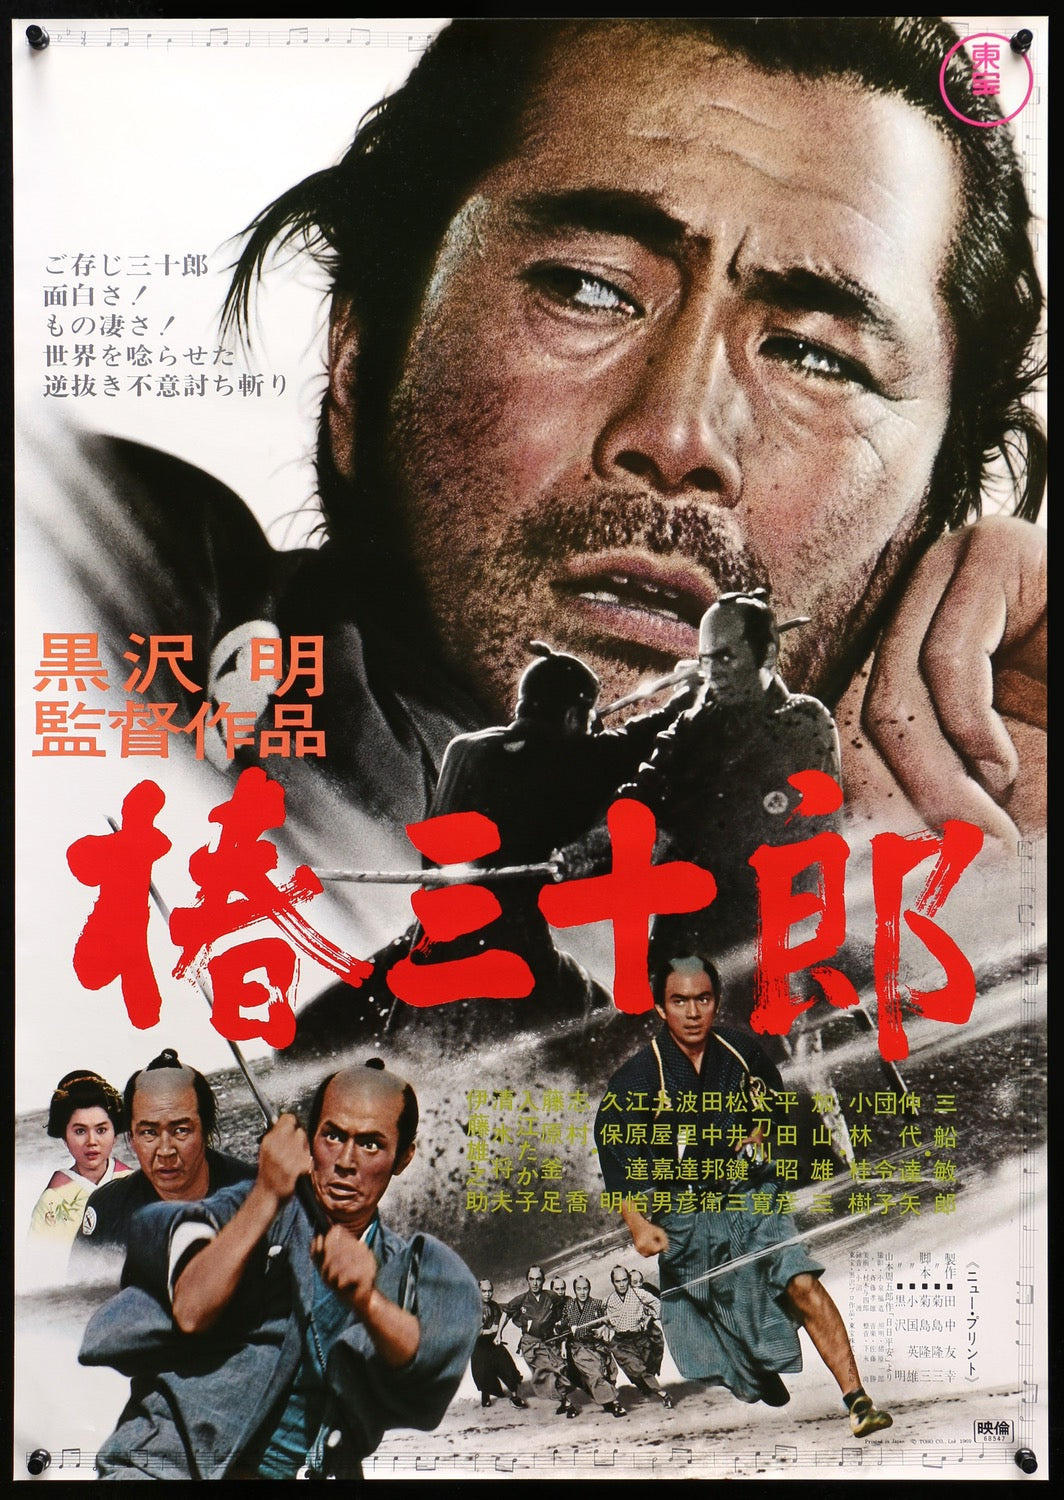 Sanjuro (1962) original movie poster for sale at Original Film Art